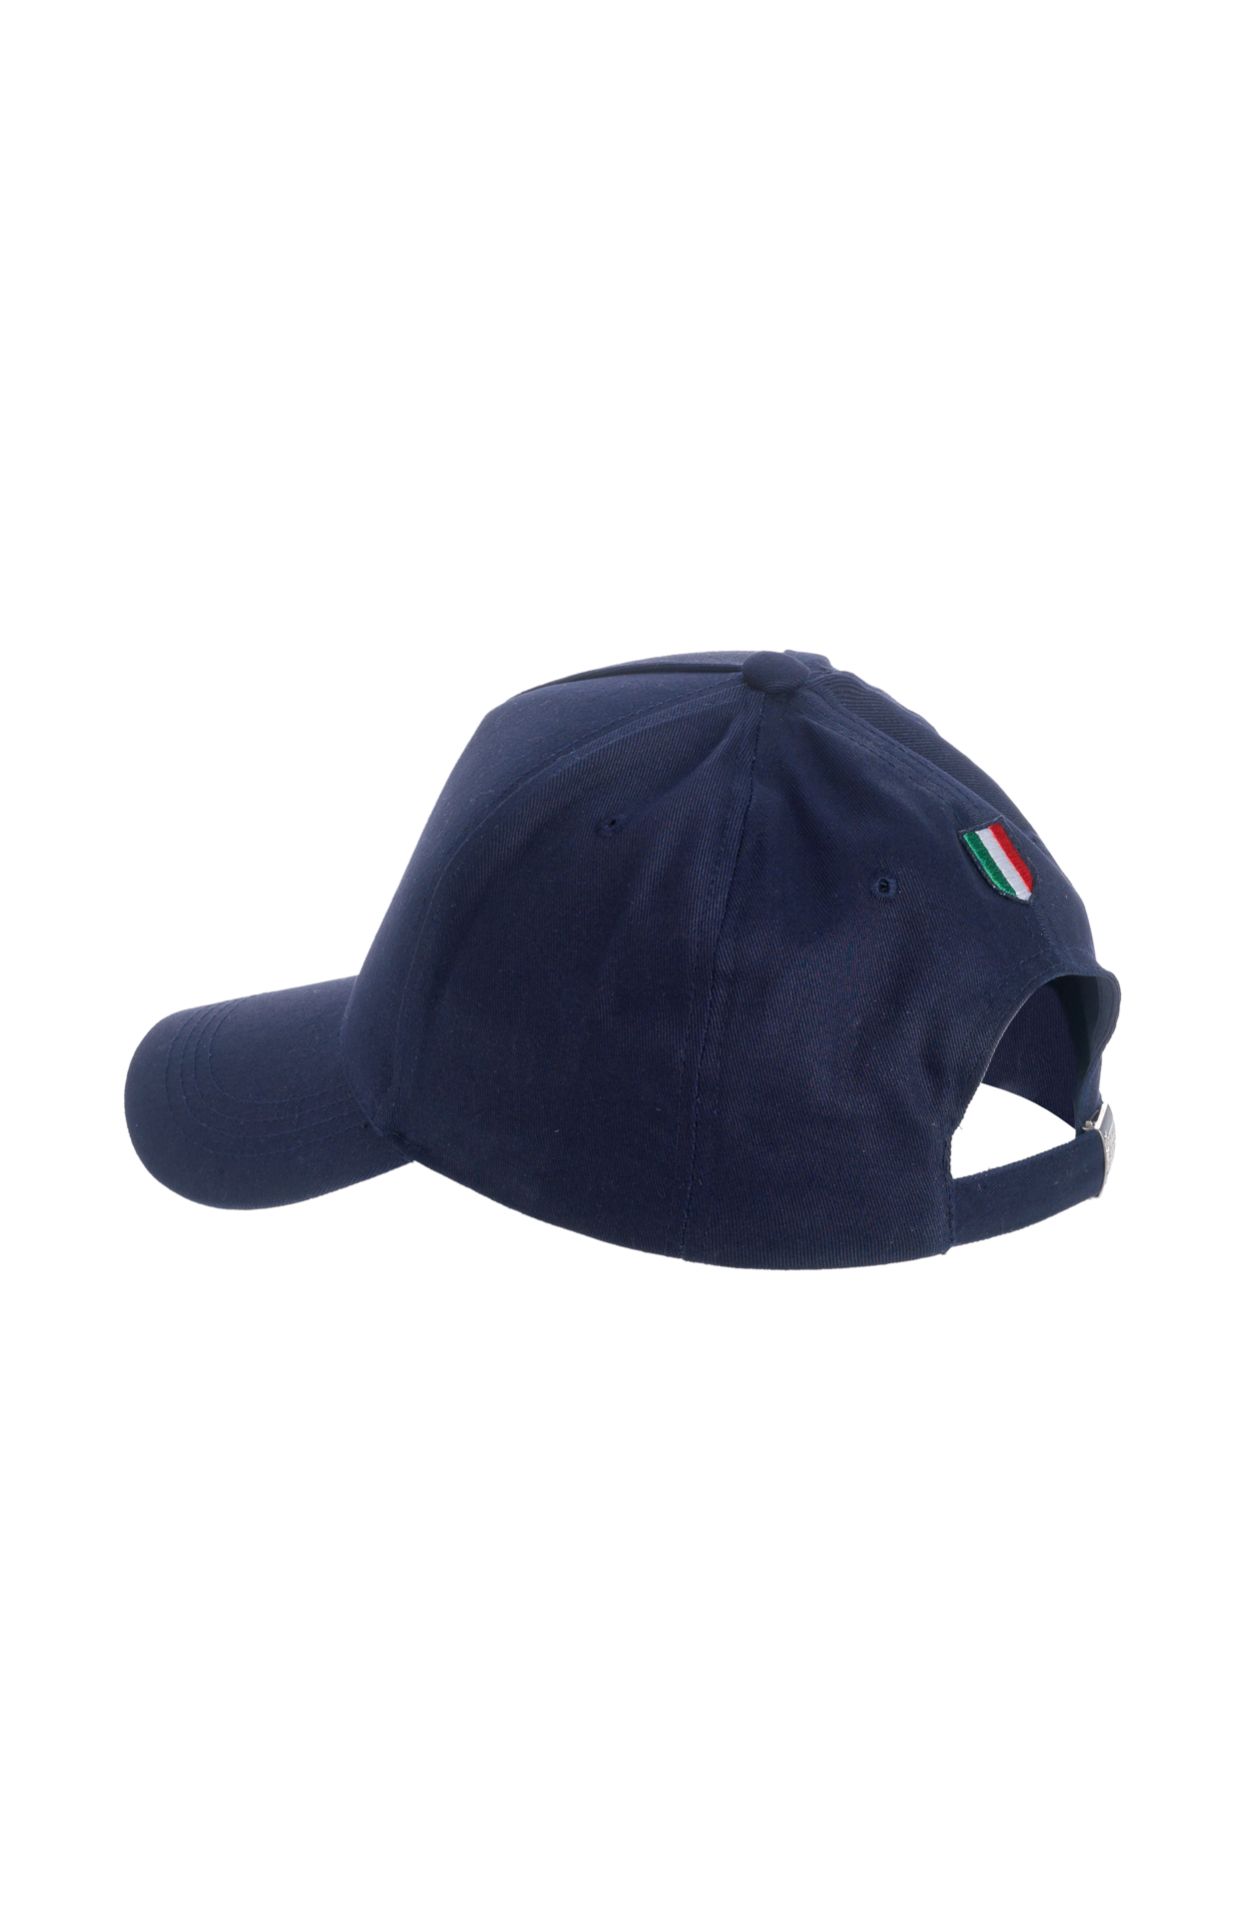 cappello baseball